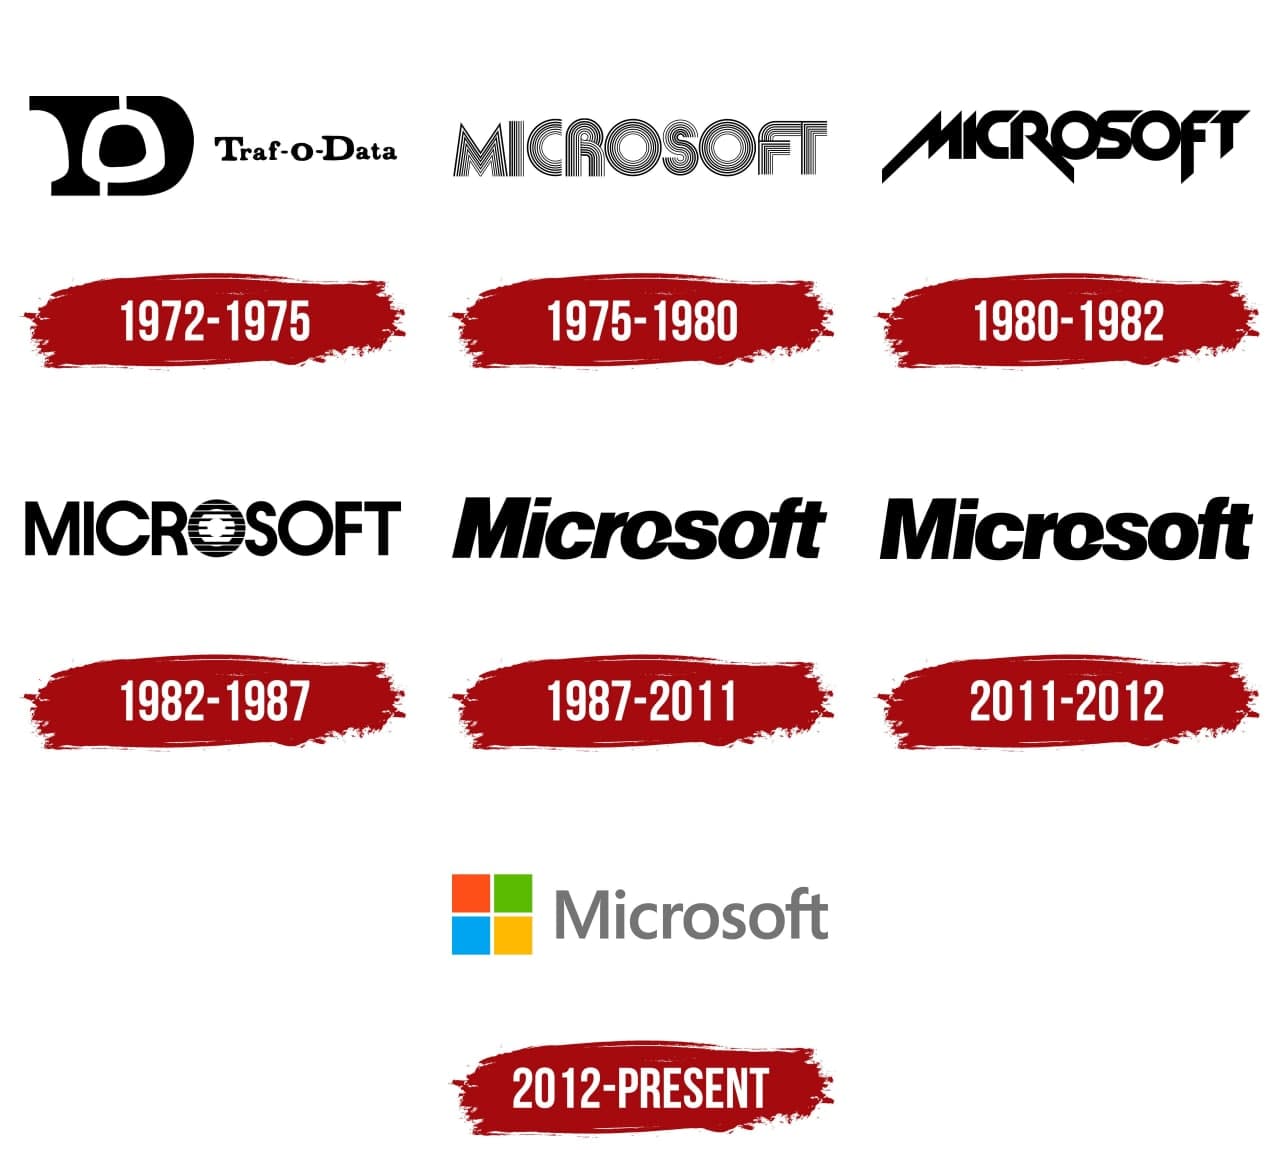 Логотип компании Microsoft